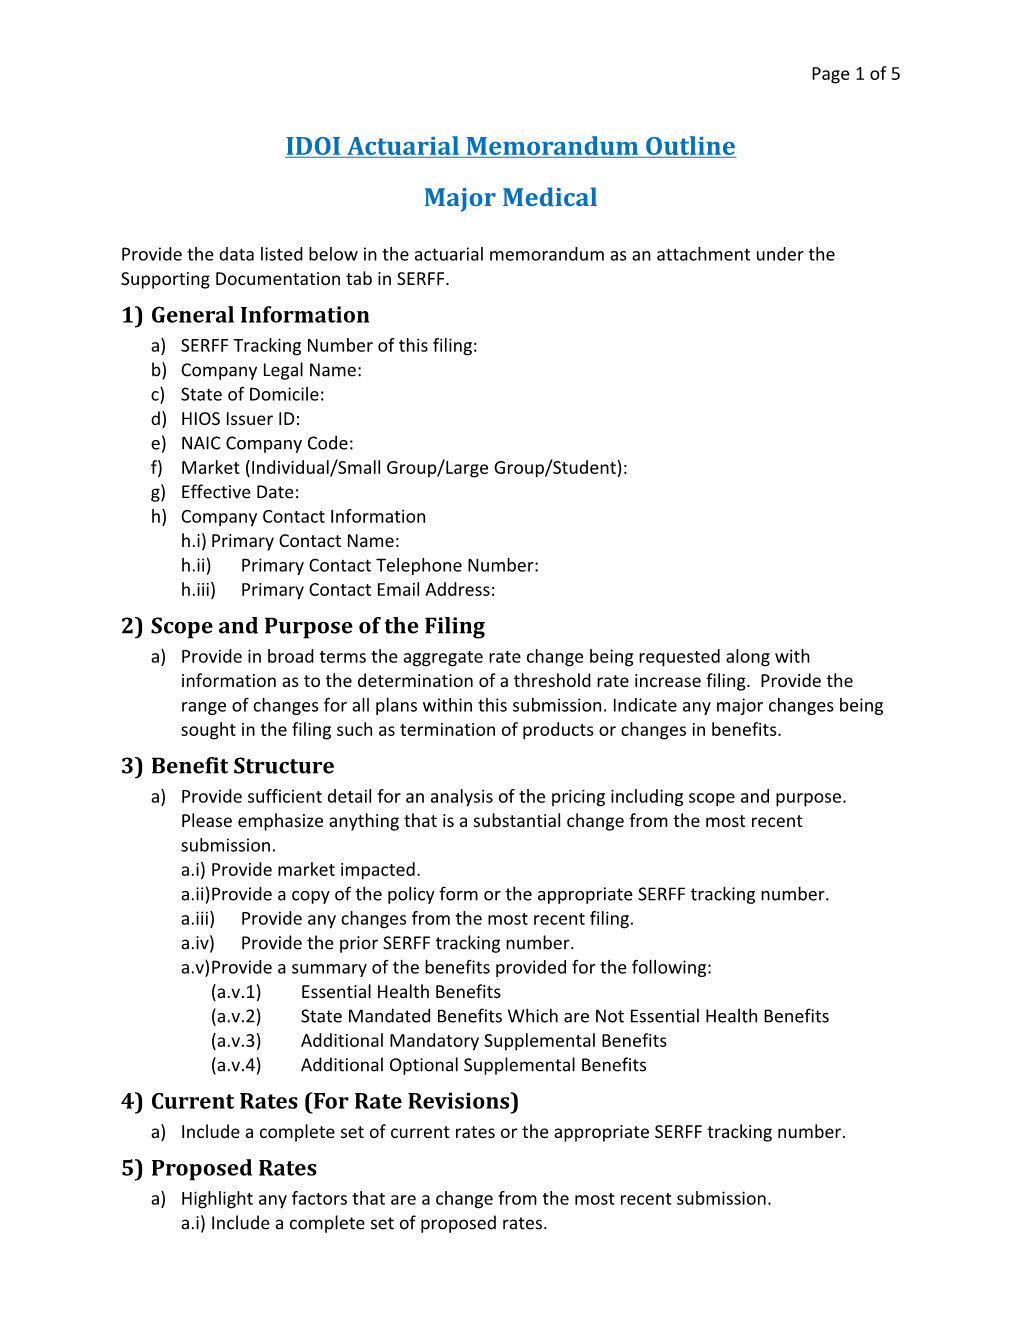 IDOI Actuarial Memorandum Outline: Major Medicalpage 1 of 5